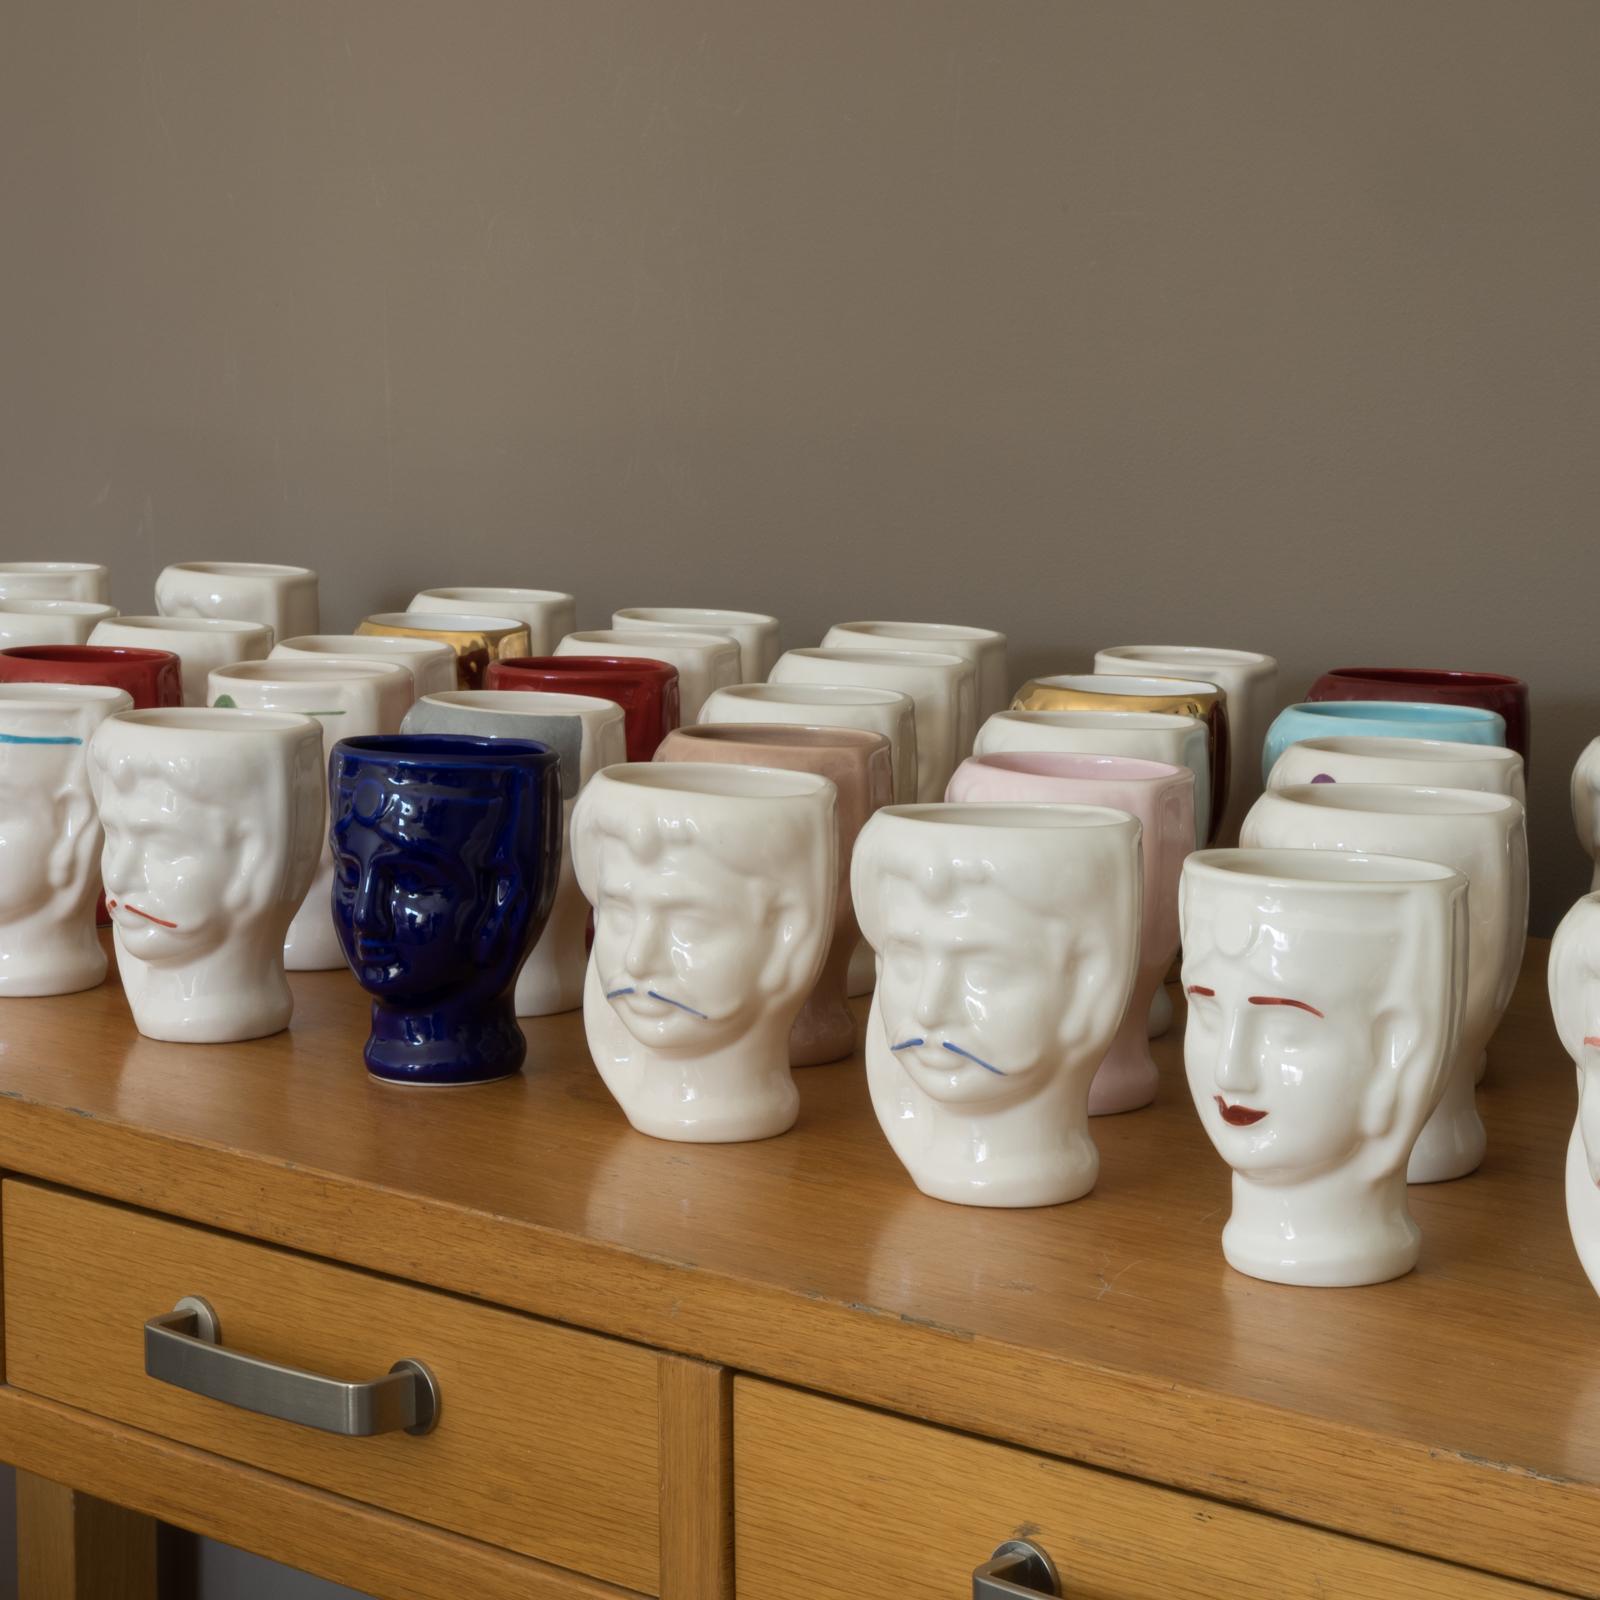 Italian 21st Century, Sicilian Moor's Head Design Ceramic Vase Handmade Made in Italy For Sale